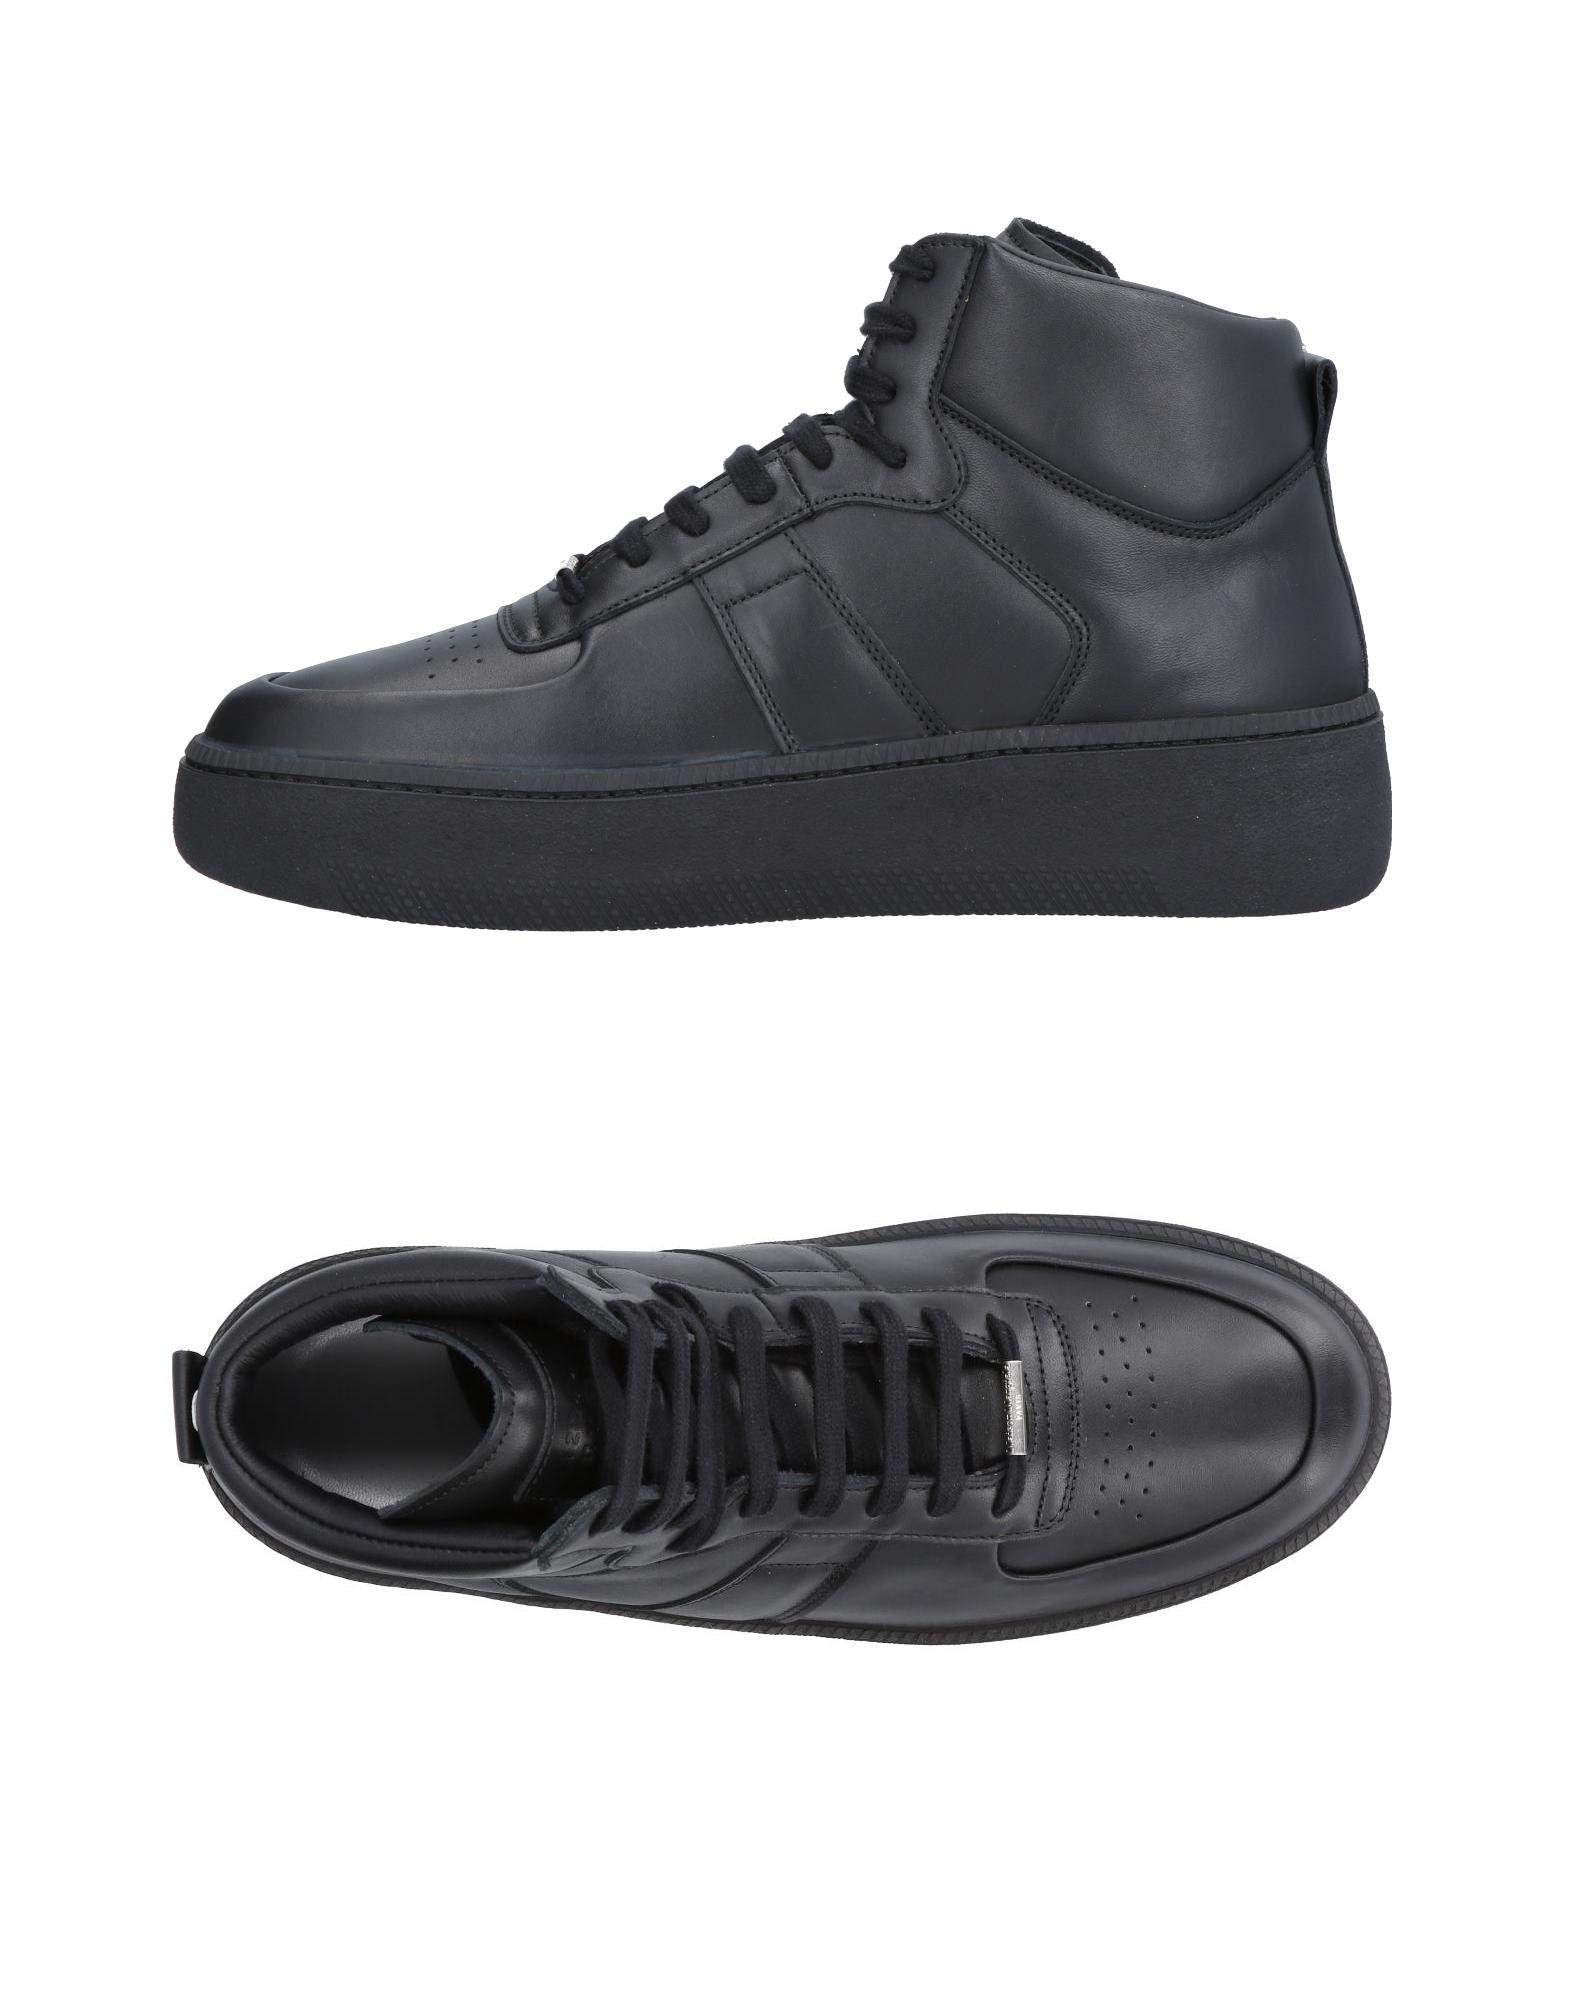 Maison Margiela High-tops & Sneakers in Black for Men - Lyst